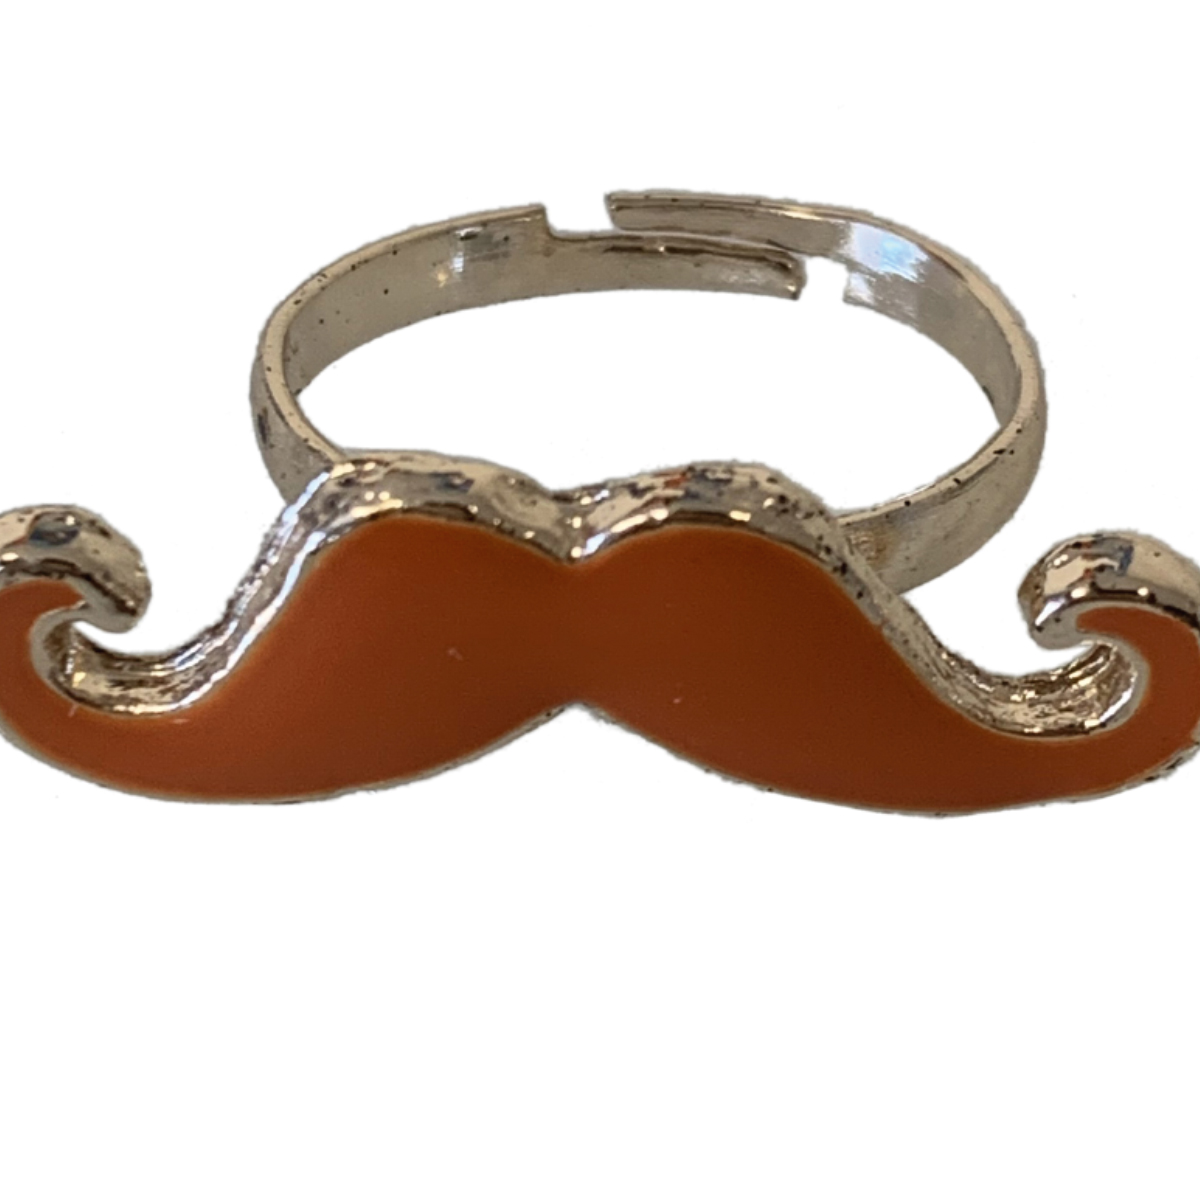 Orange Moustache Ring